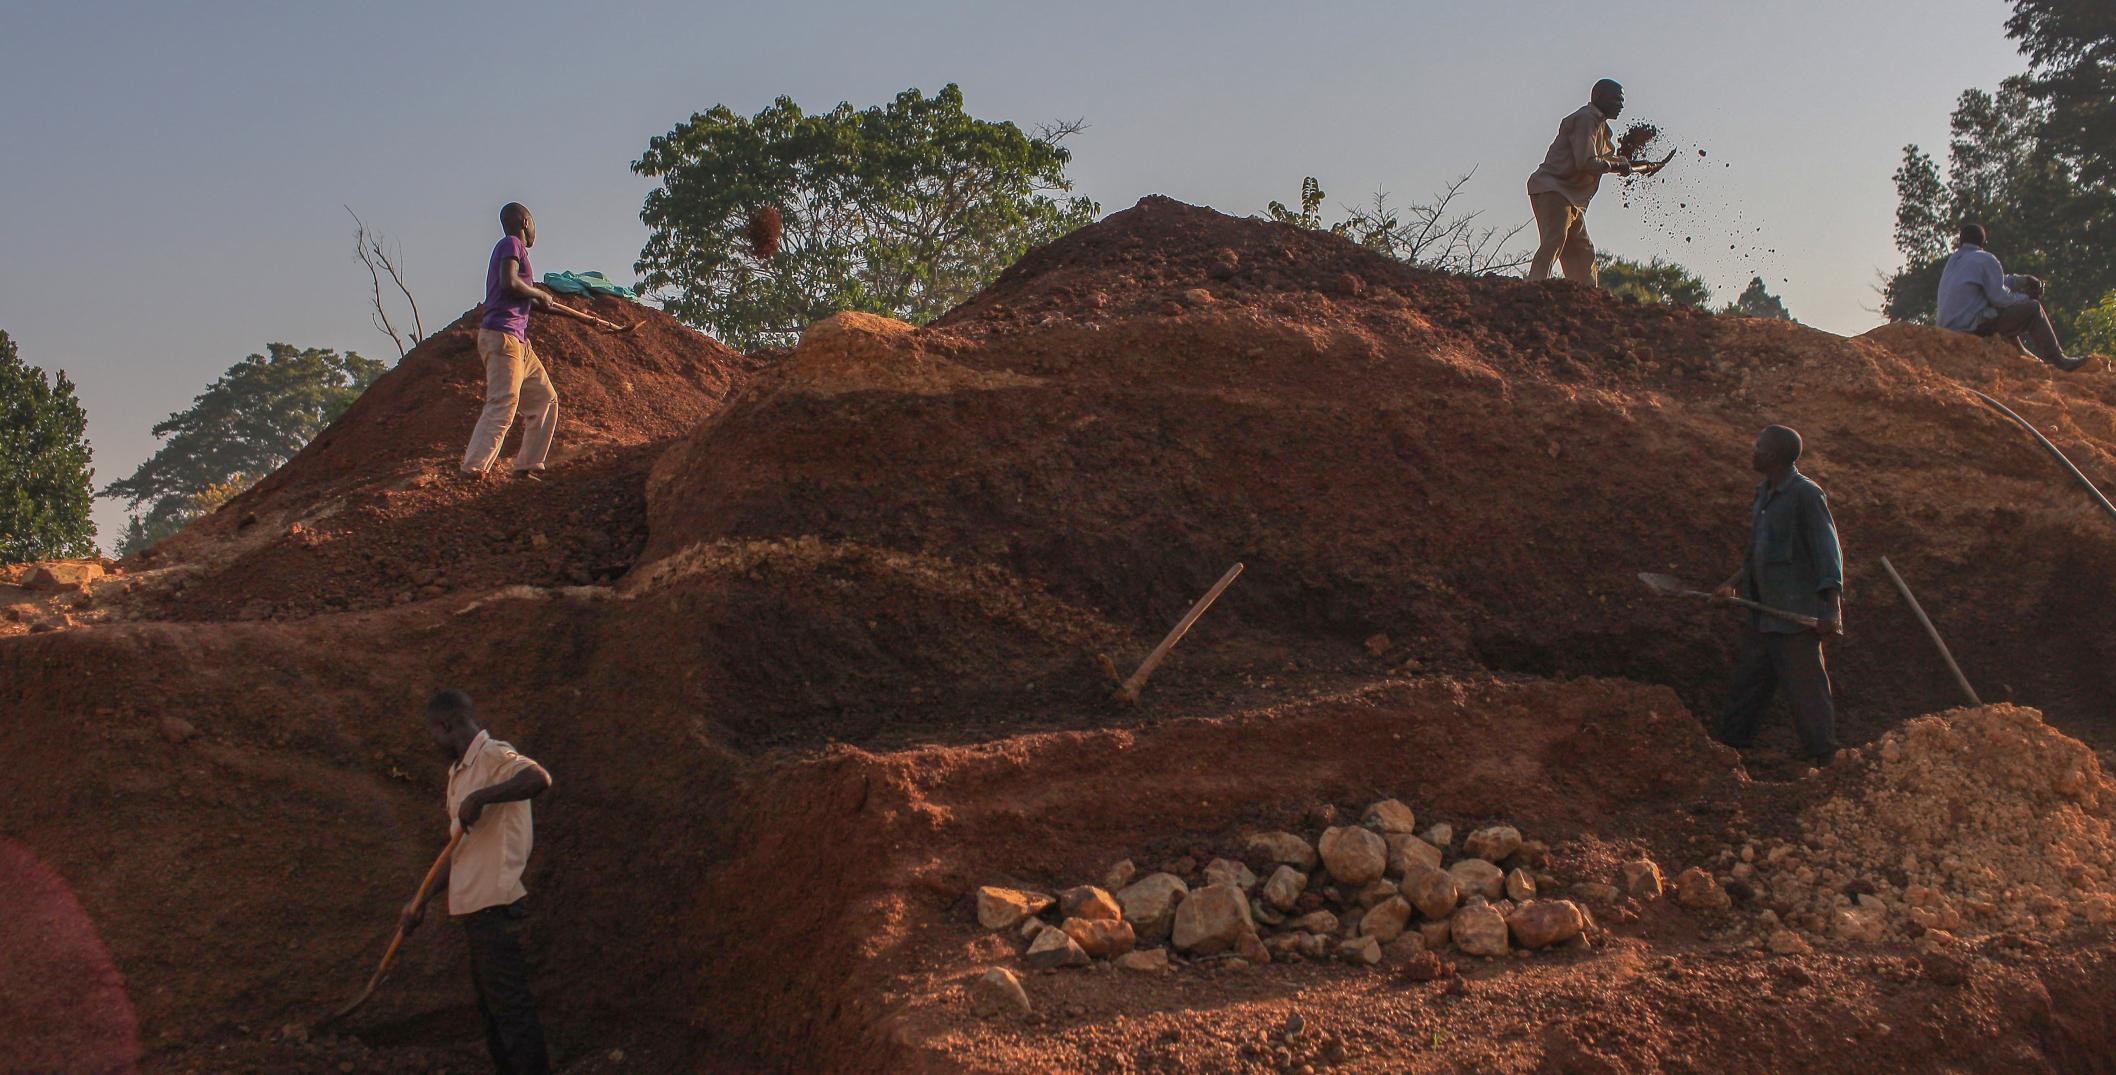 Artisanal miners at the gold mine in Uganda